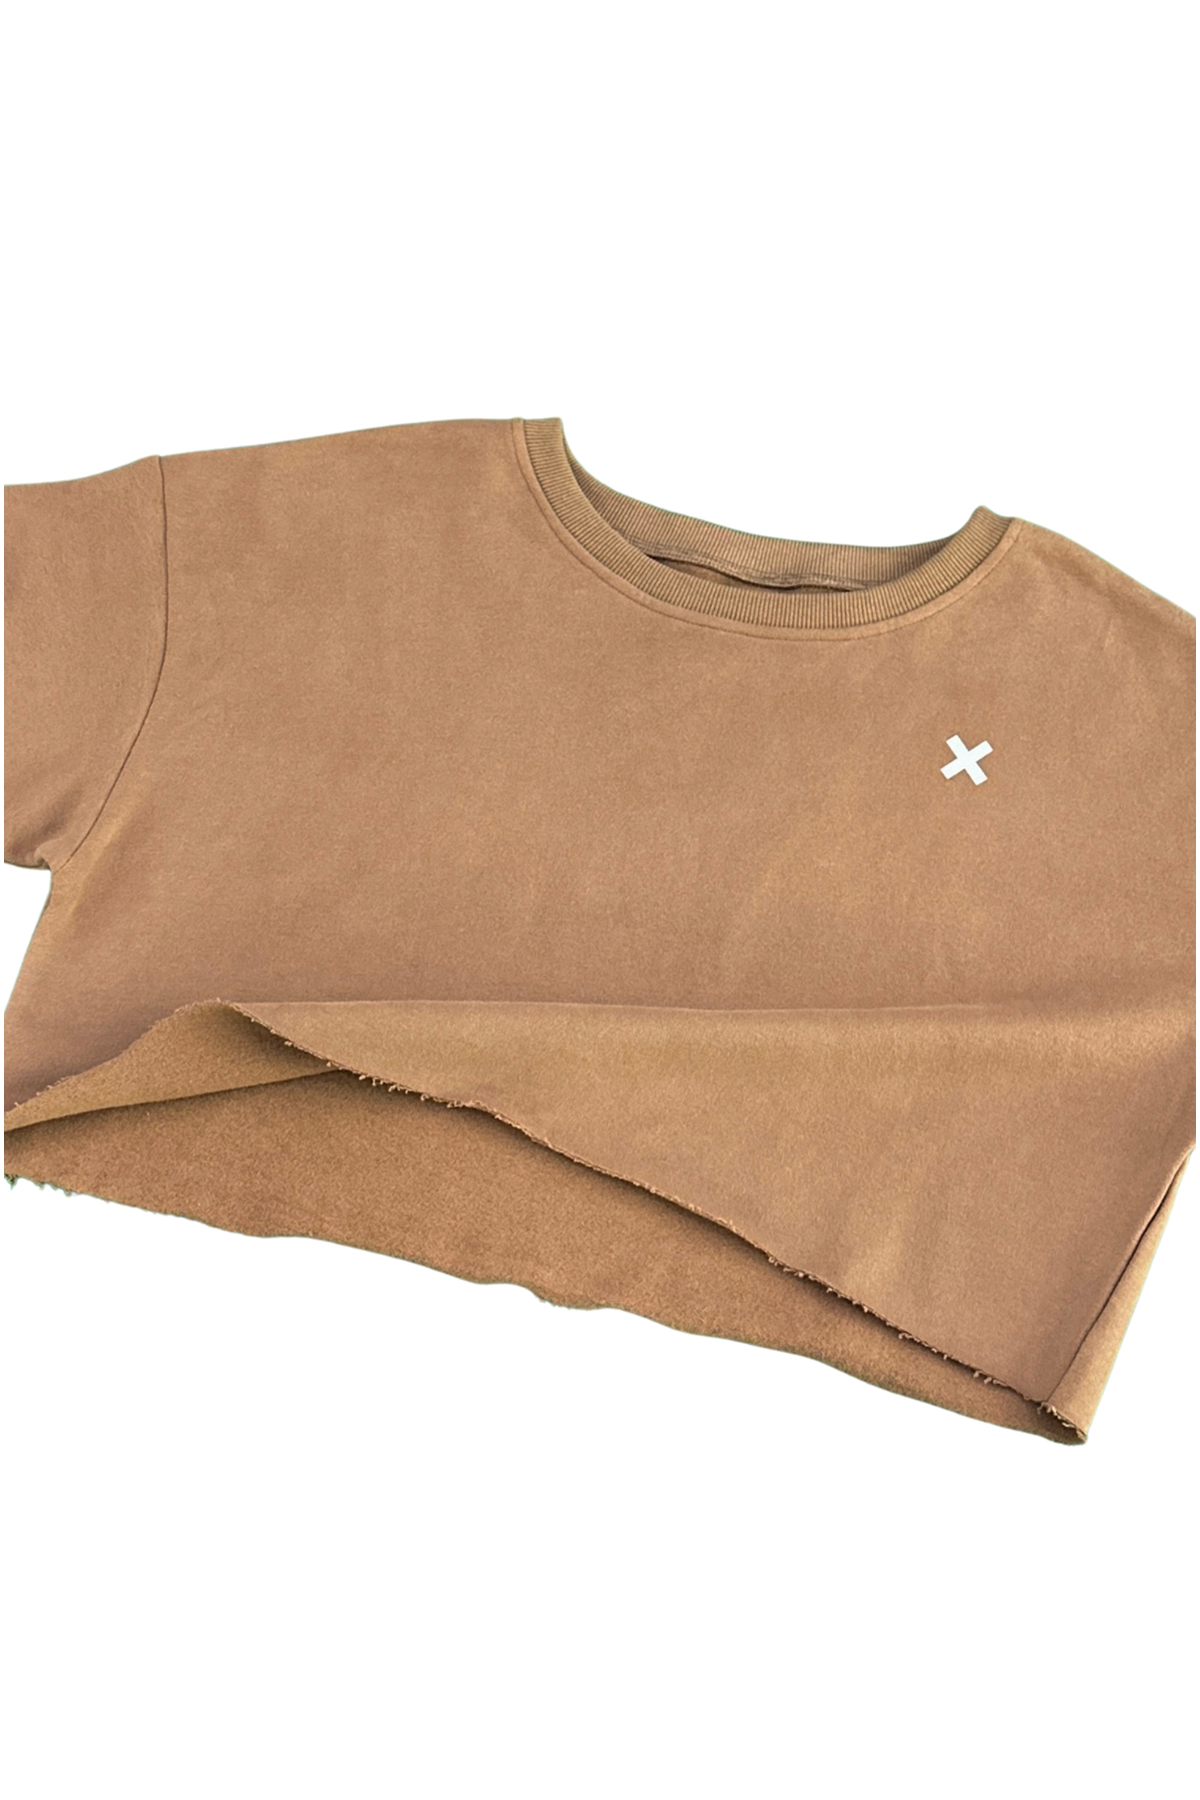 Time-Out-X-Cropped-Workout-Sweatshirt-khaki-front-close